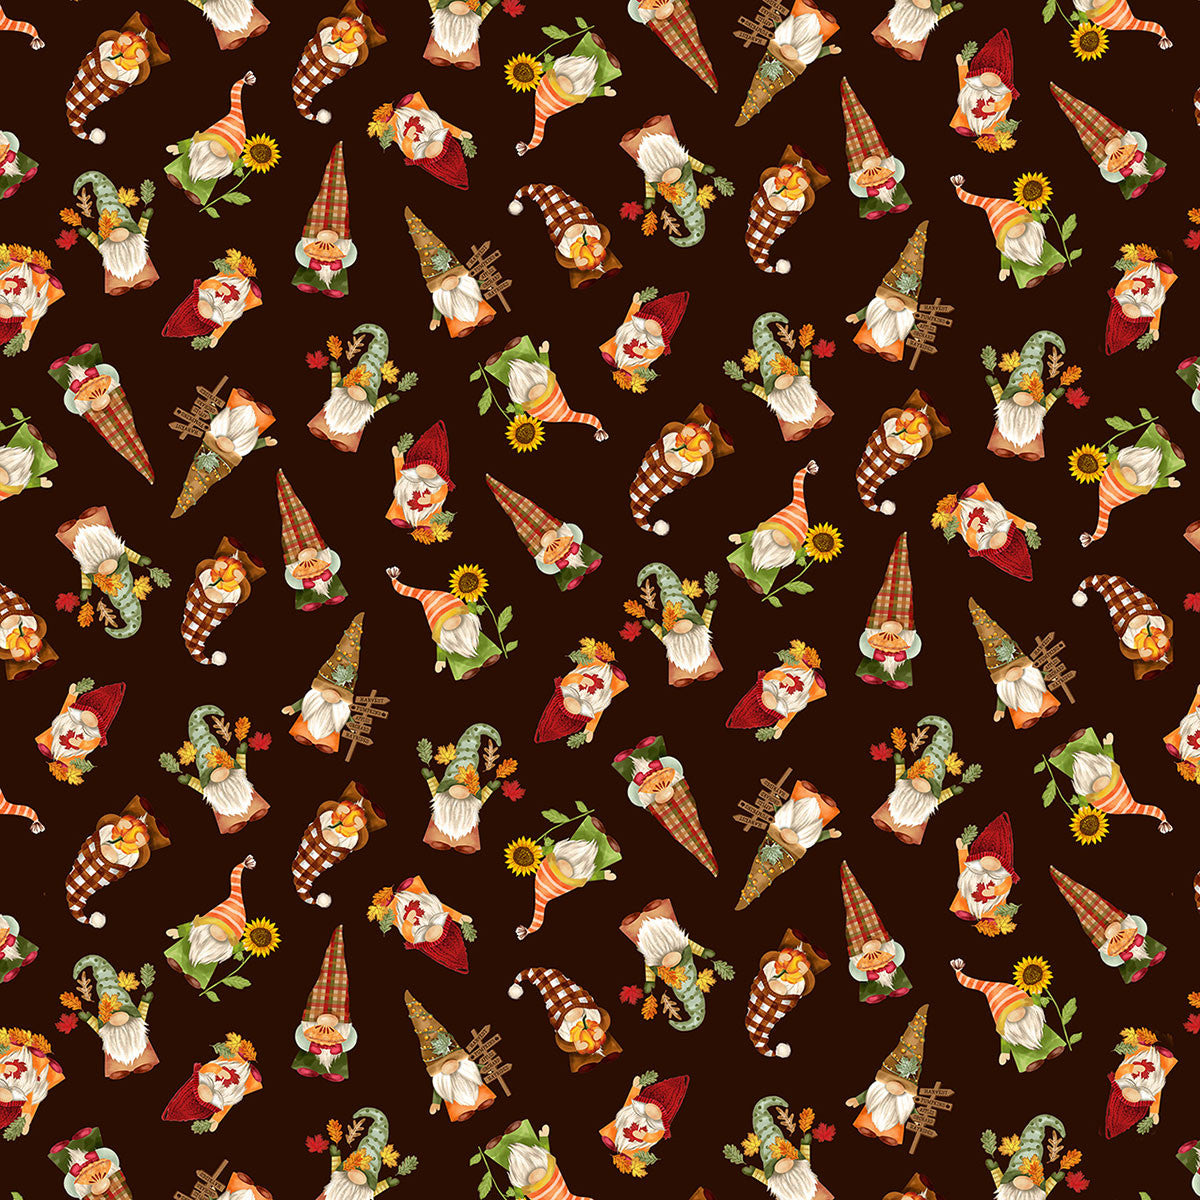 44 x 36 Timeless Treasures Autumn Gnomes on Dark Brown 100% Cotton Fabric